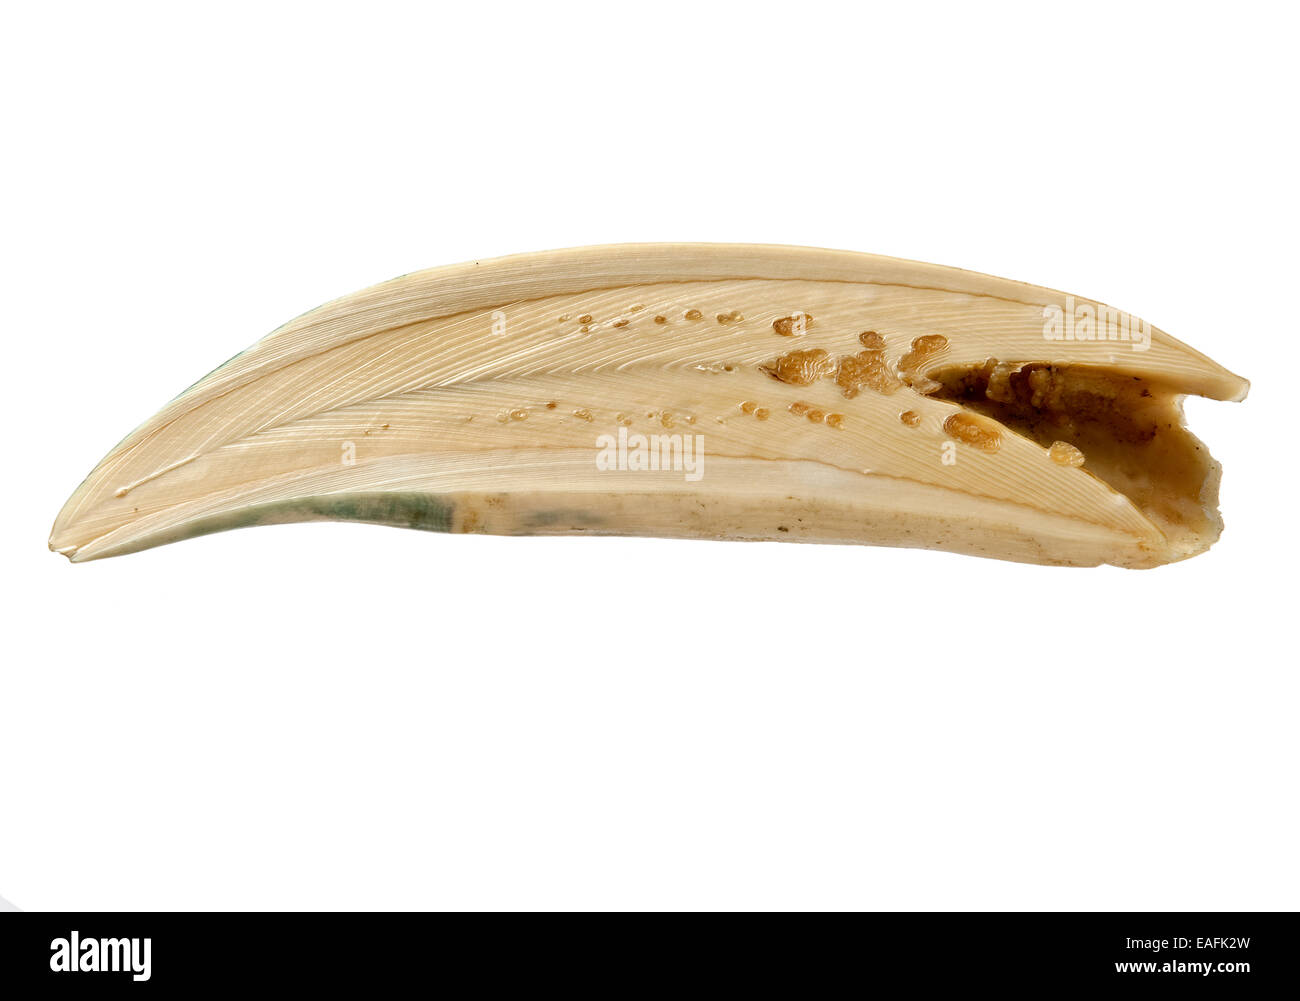 Physeter macrocephalus, Sperm whale tooth Stock Photo